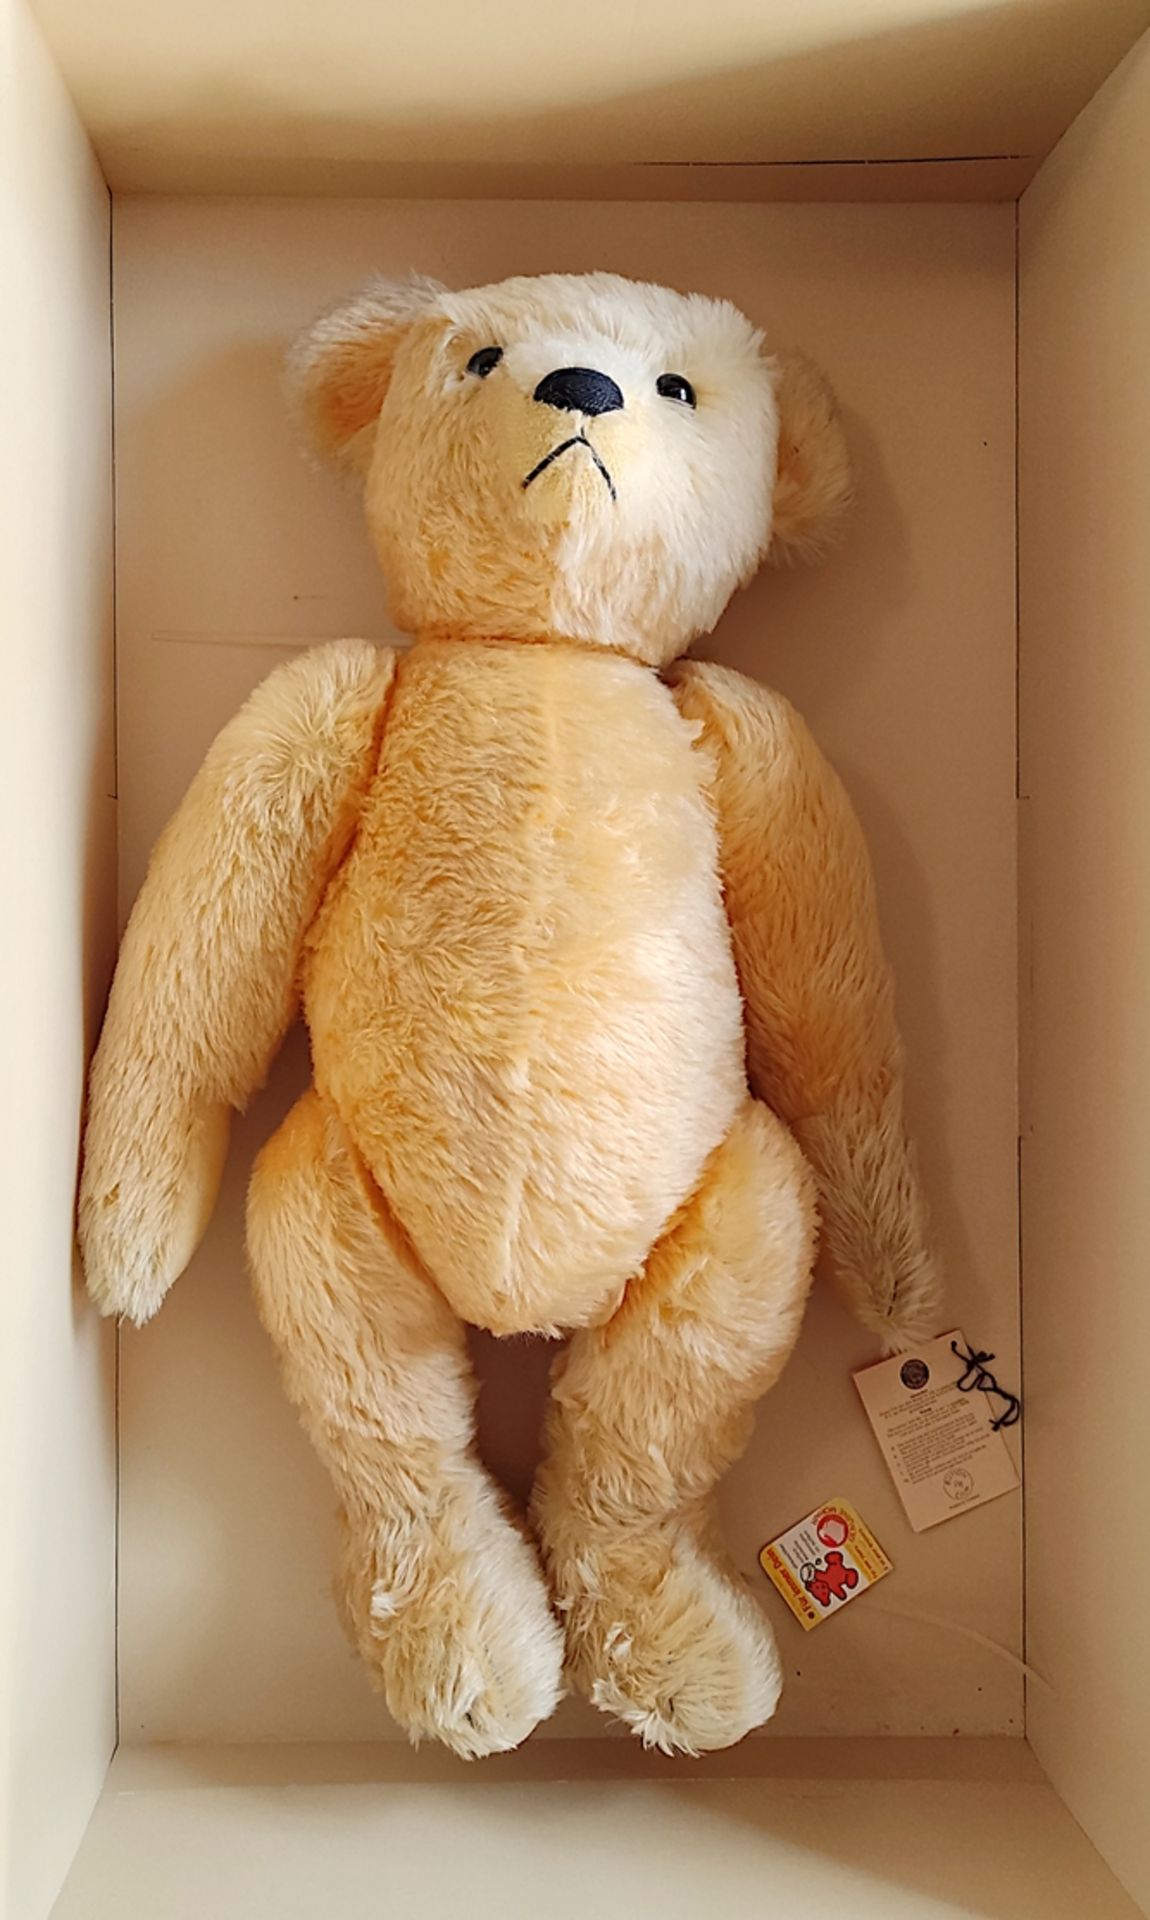 Steiff replica teddy bear "1909", blond 65, limited edition 5000, in original box, flag missing - Image 3 of 4